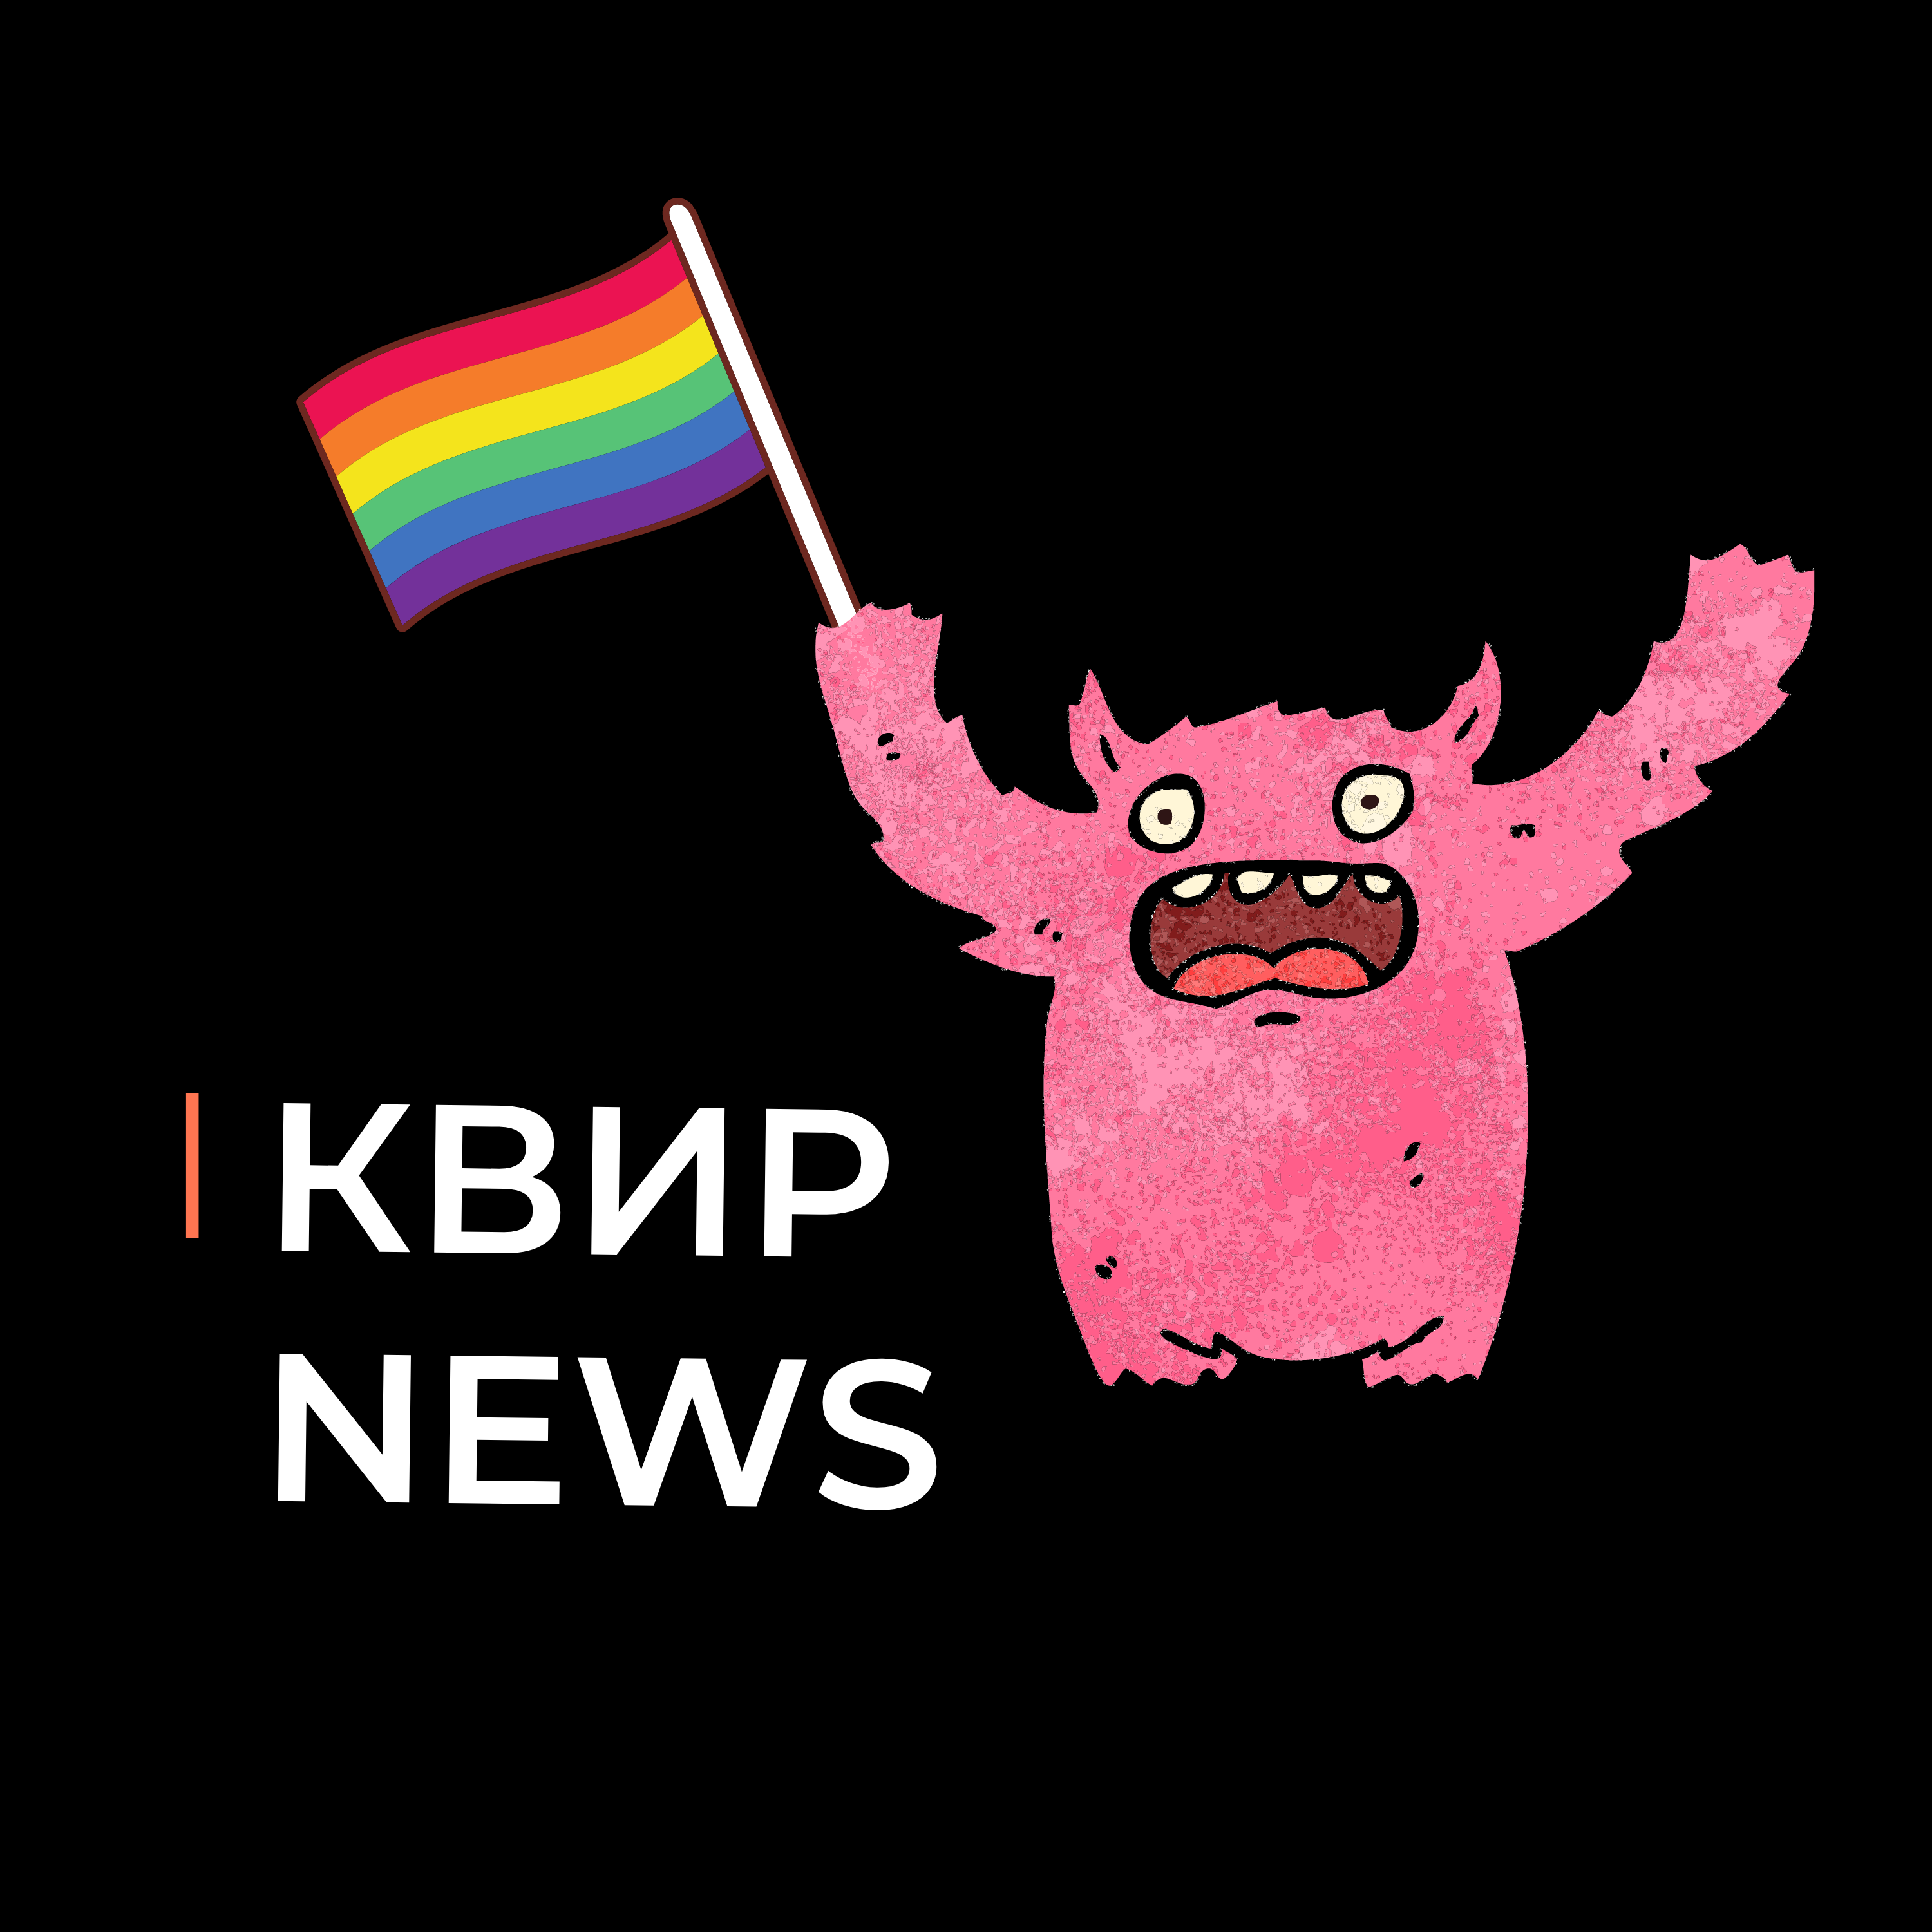 Андрей Курпатов — гей? – Квир News 18+ – PC.ST